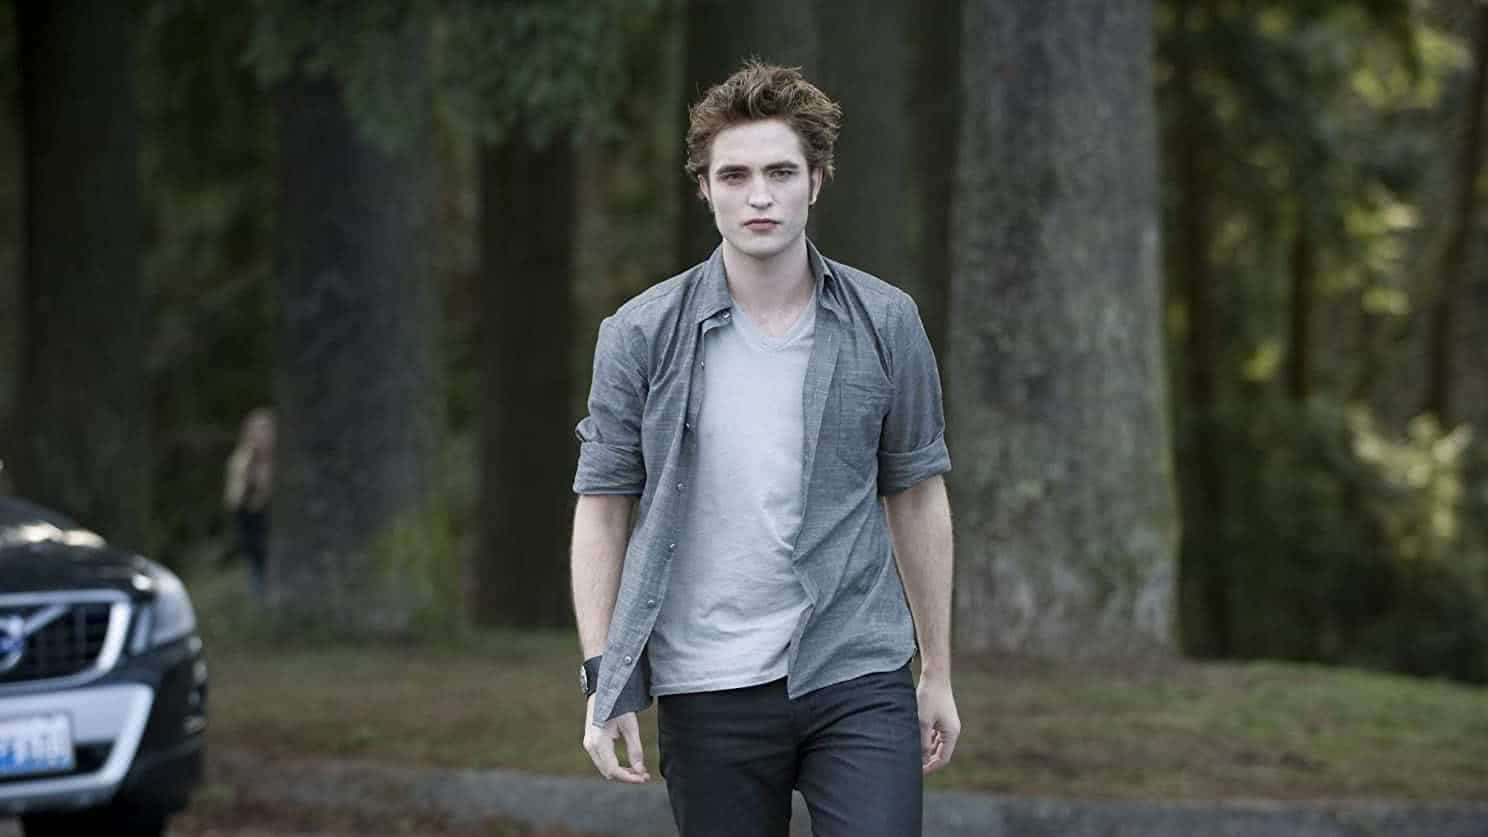 Edward Cullen (Robert Pattinson) in The Twilight Saga